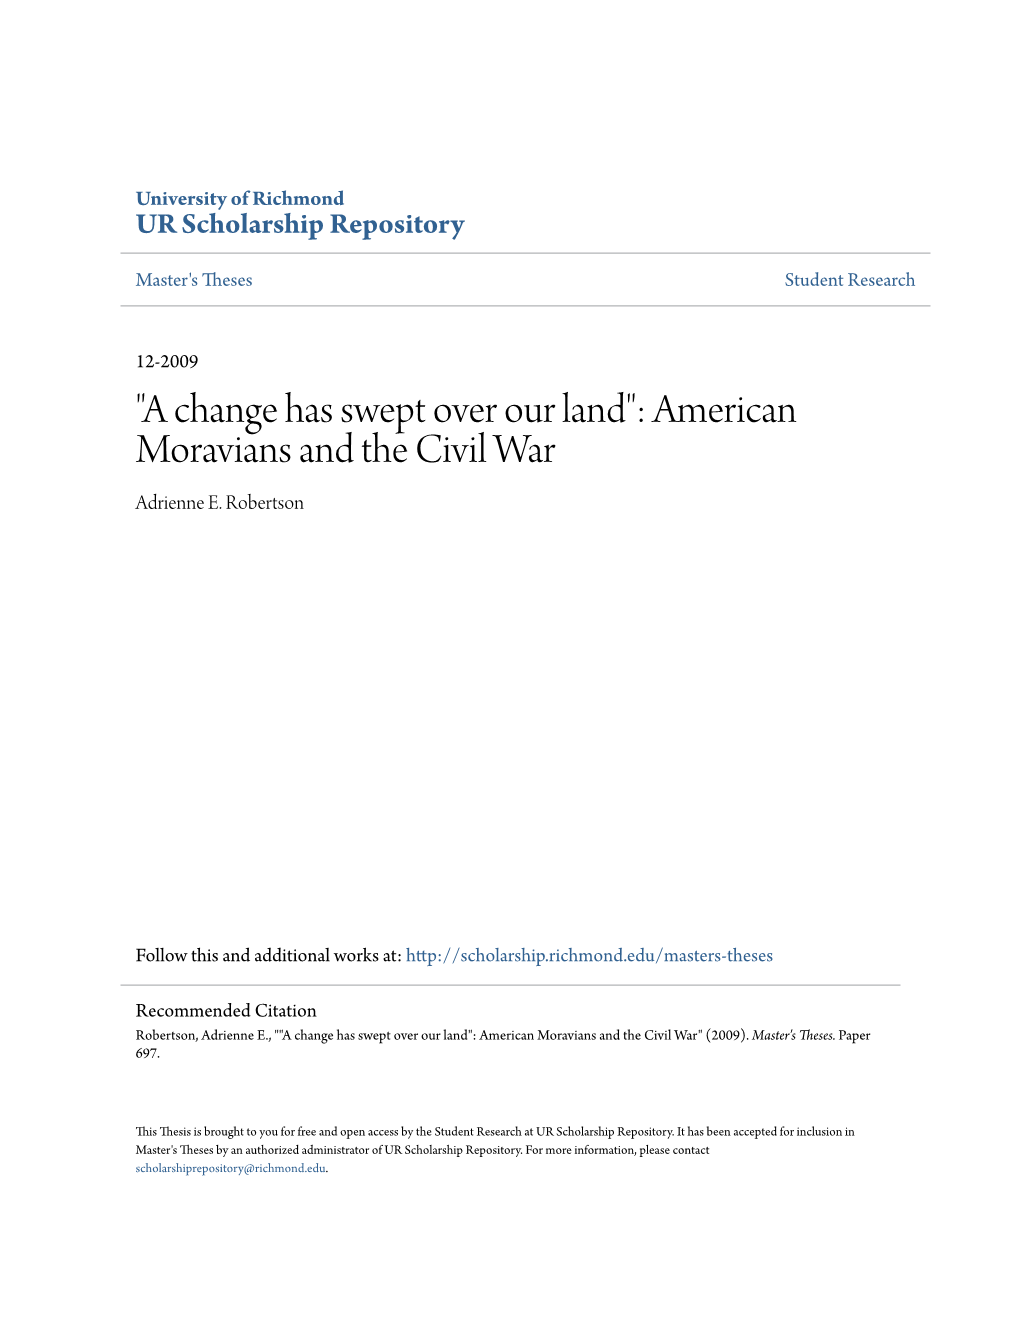 American Moravians and the Civil War Adrienne E